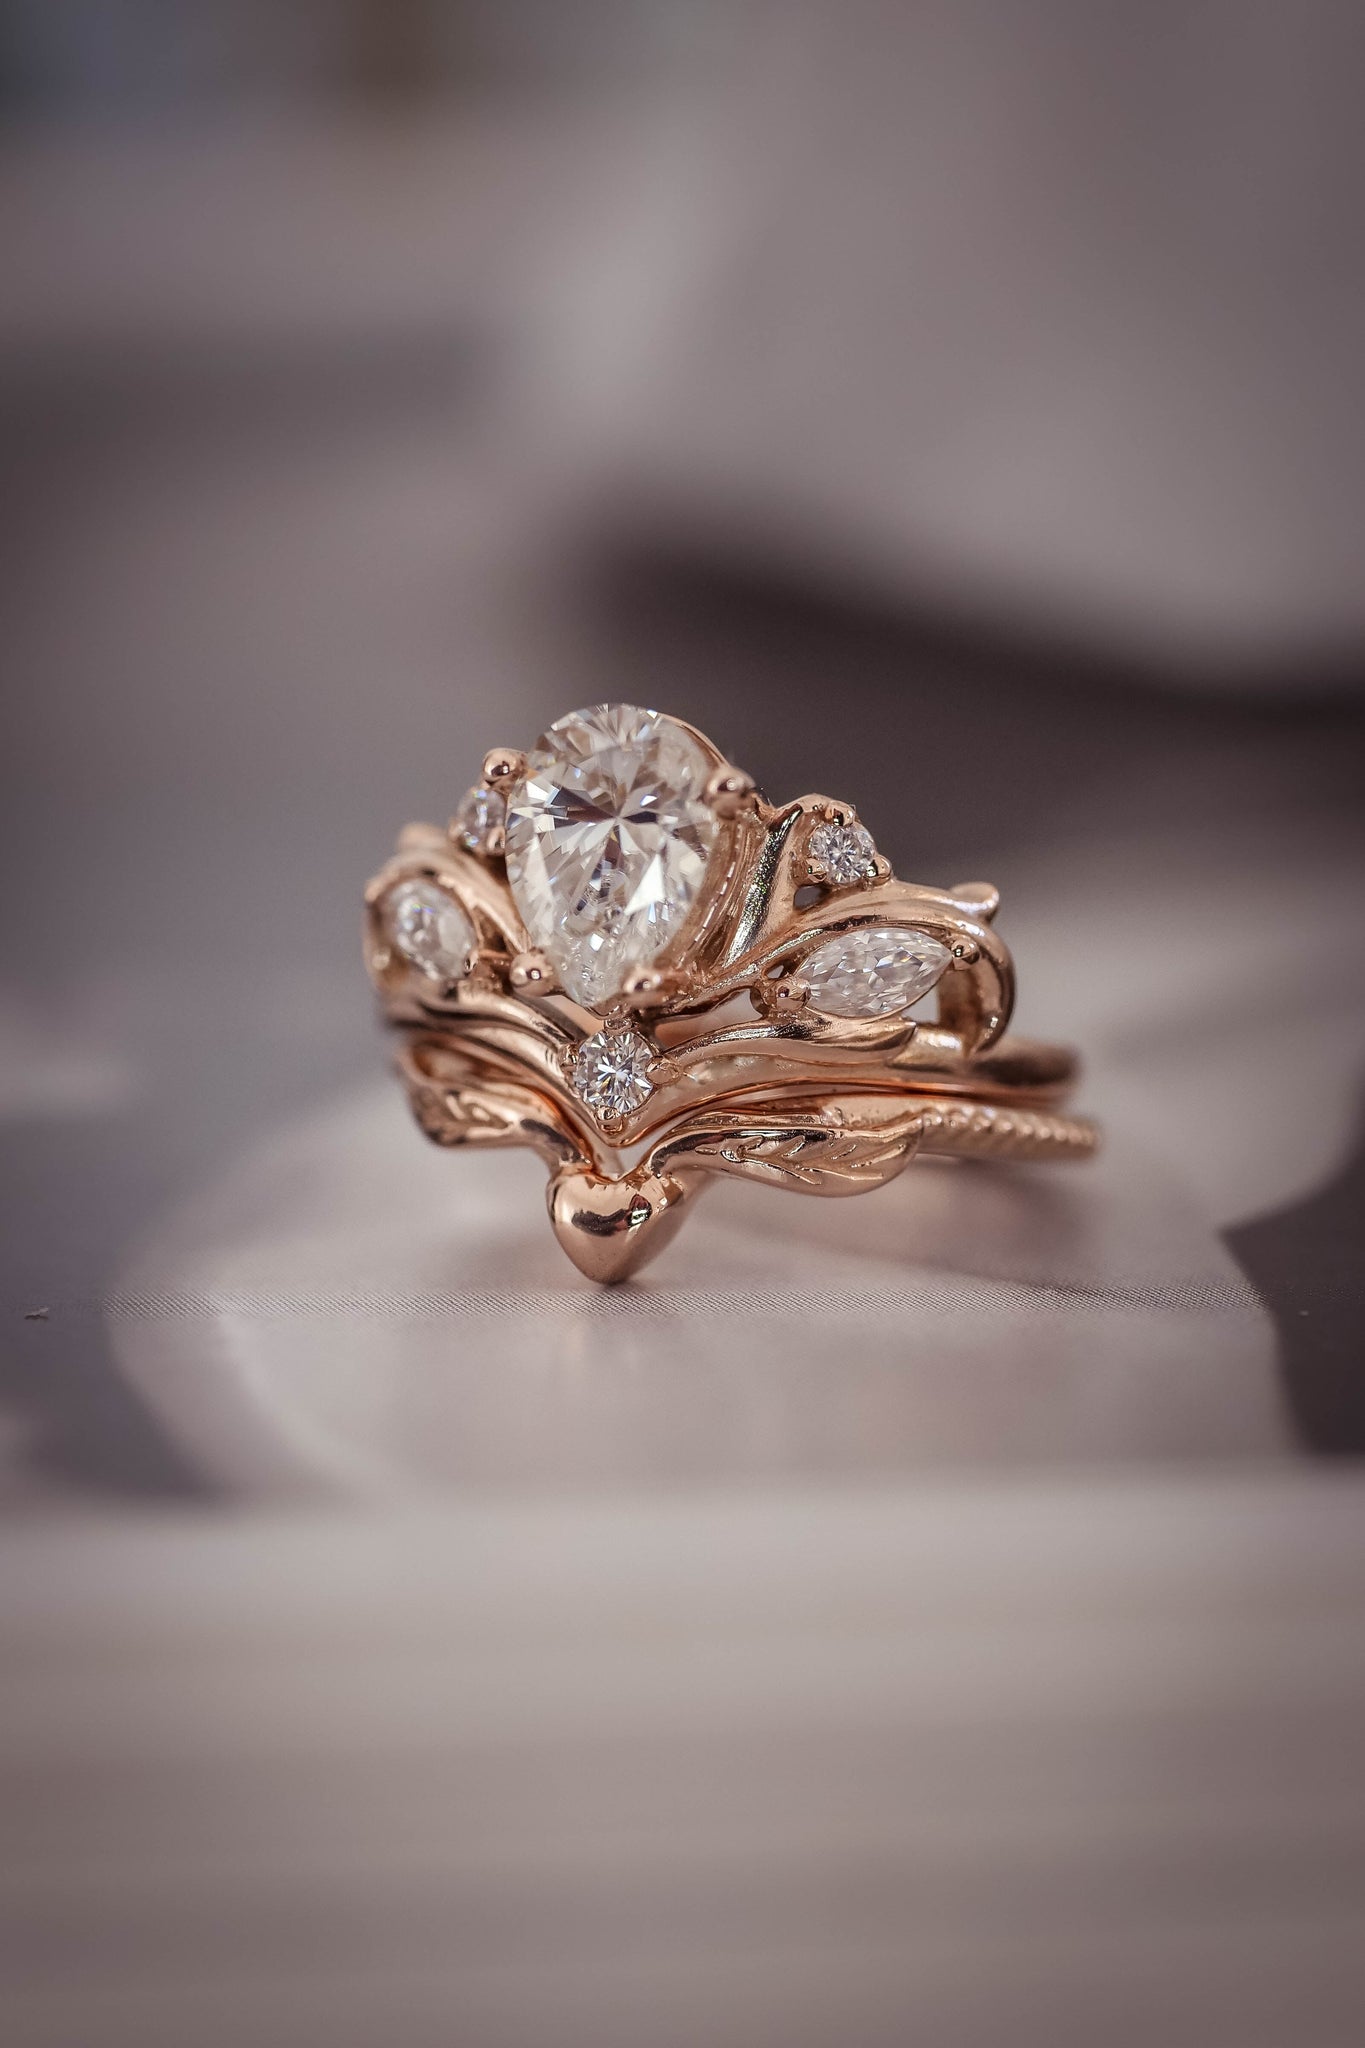 Genuine white sapphire engagement ring, nature inspired rose gold proposal ring / Swanlake - Eden Garden Jewelry™